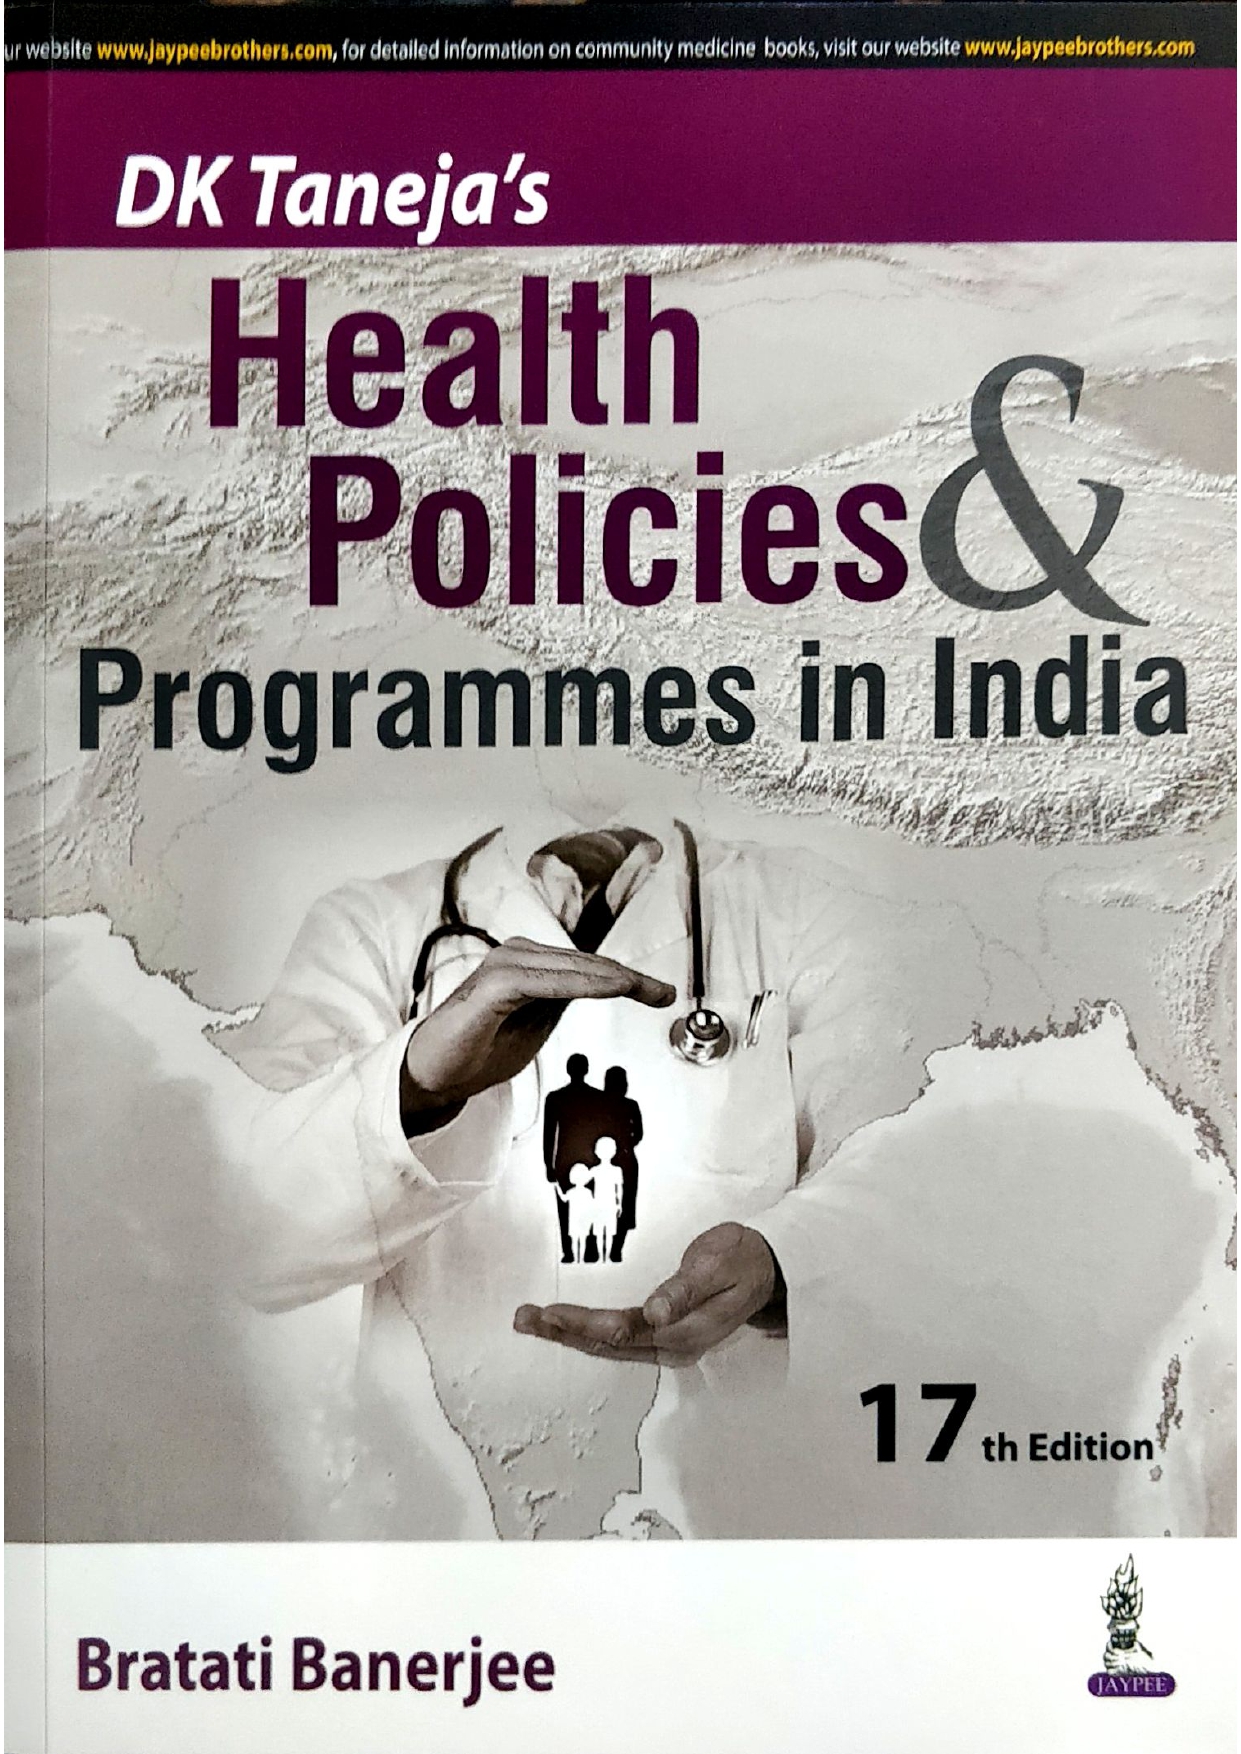 DK Taneja's Health Policies & Programmes in India